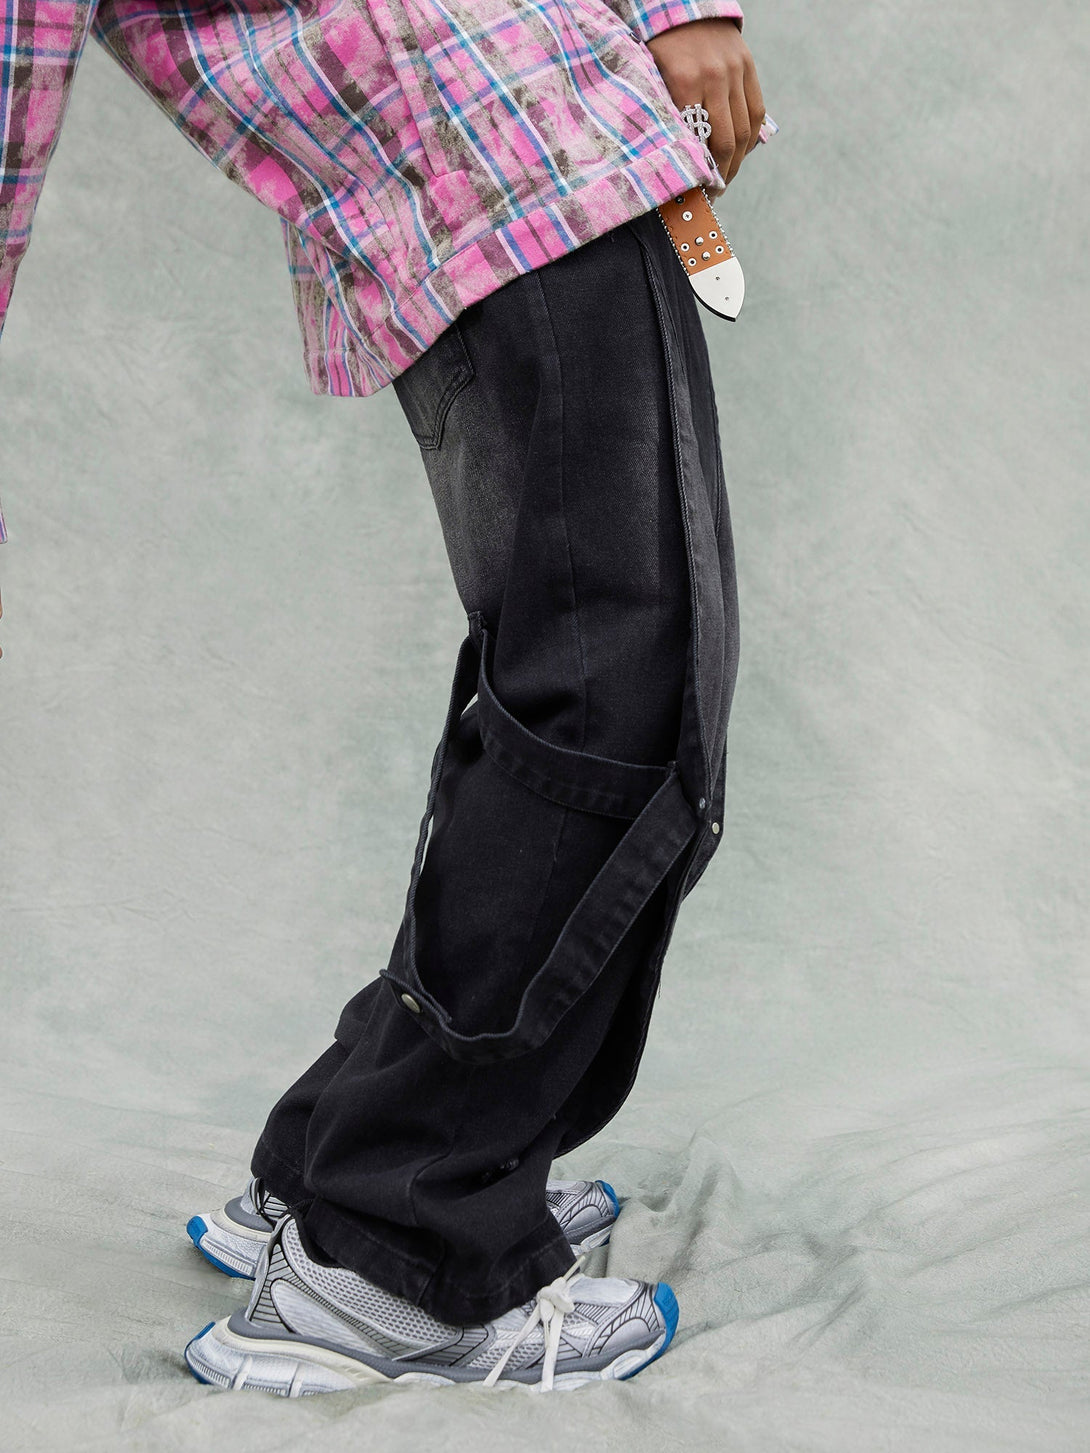 Majesda® - Washed Ripped Denim Jeans- Outfit Ideas - Streetwear Fashion - majesda.com